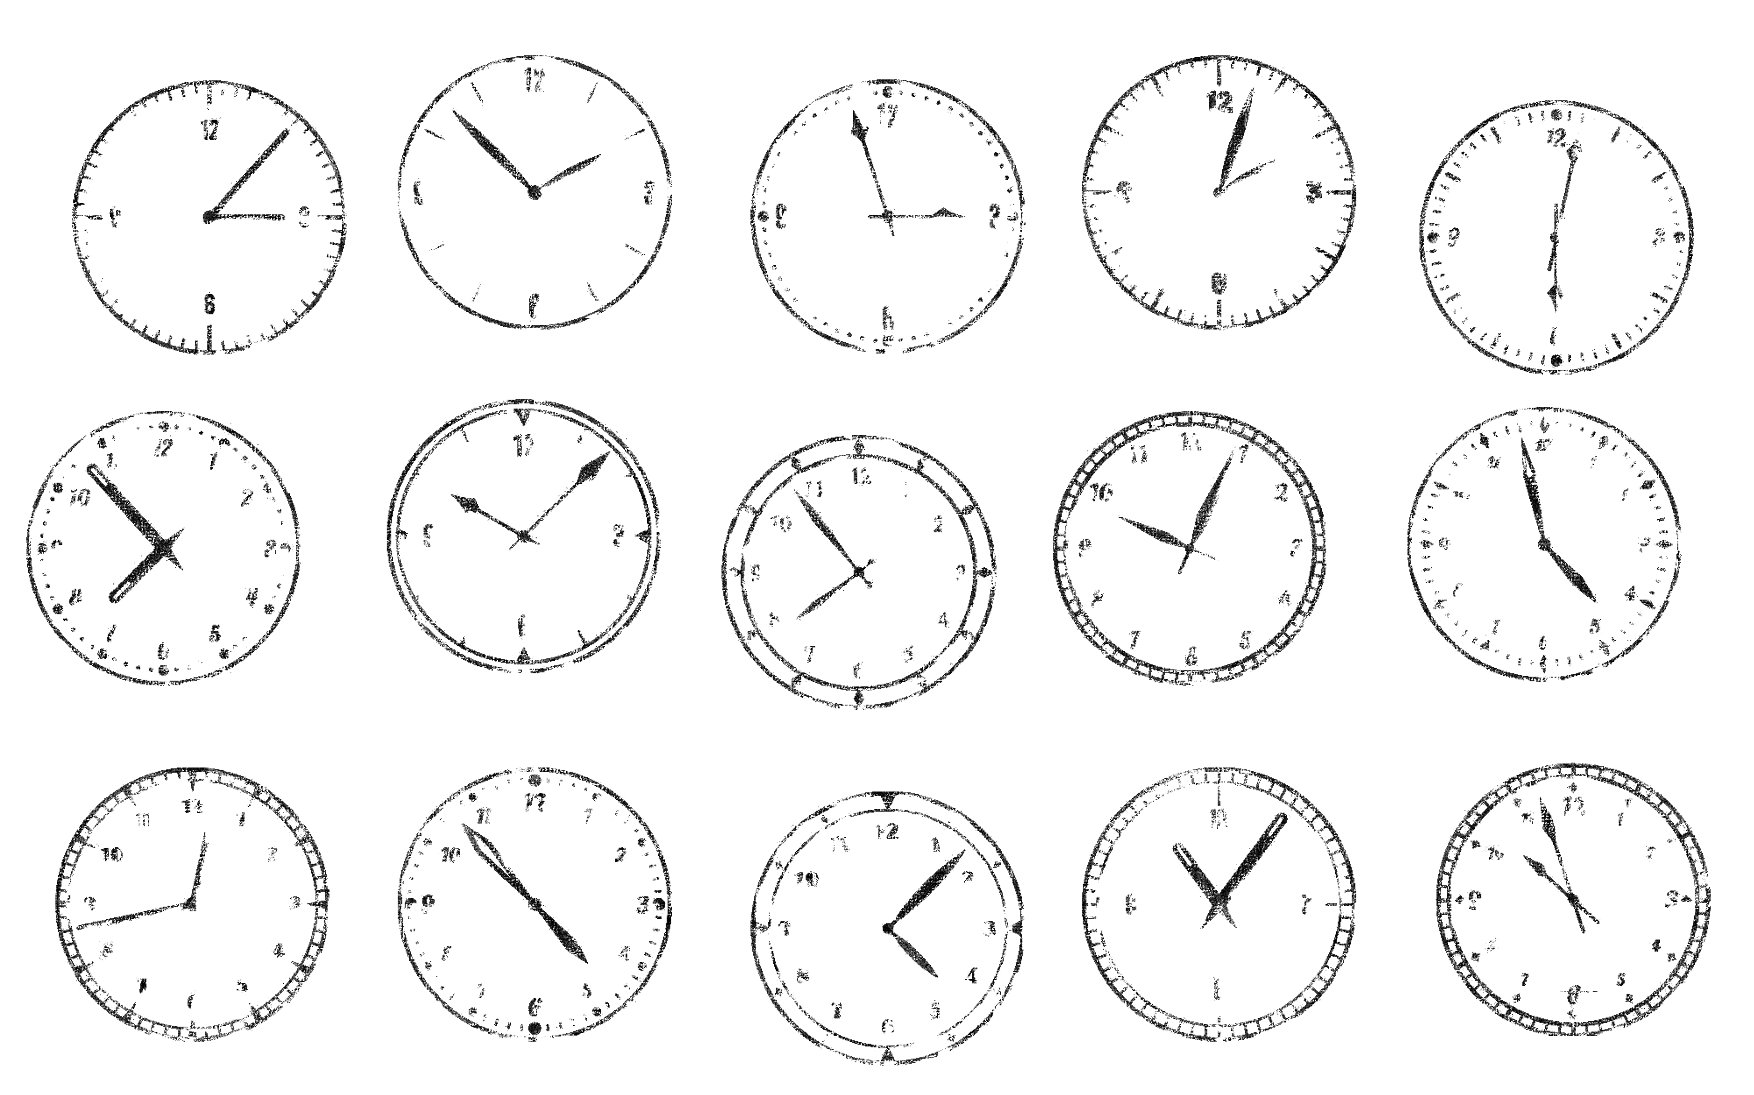 15 blurried slightlyt unaligned clocks